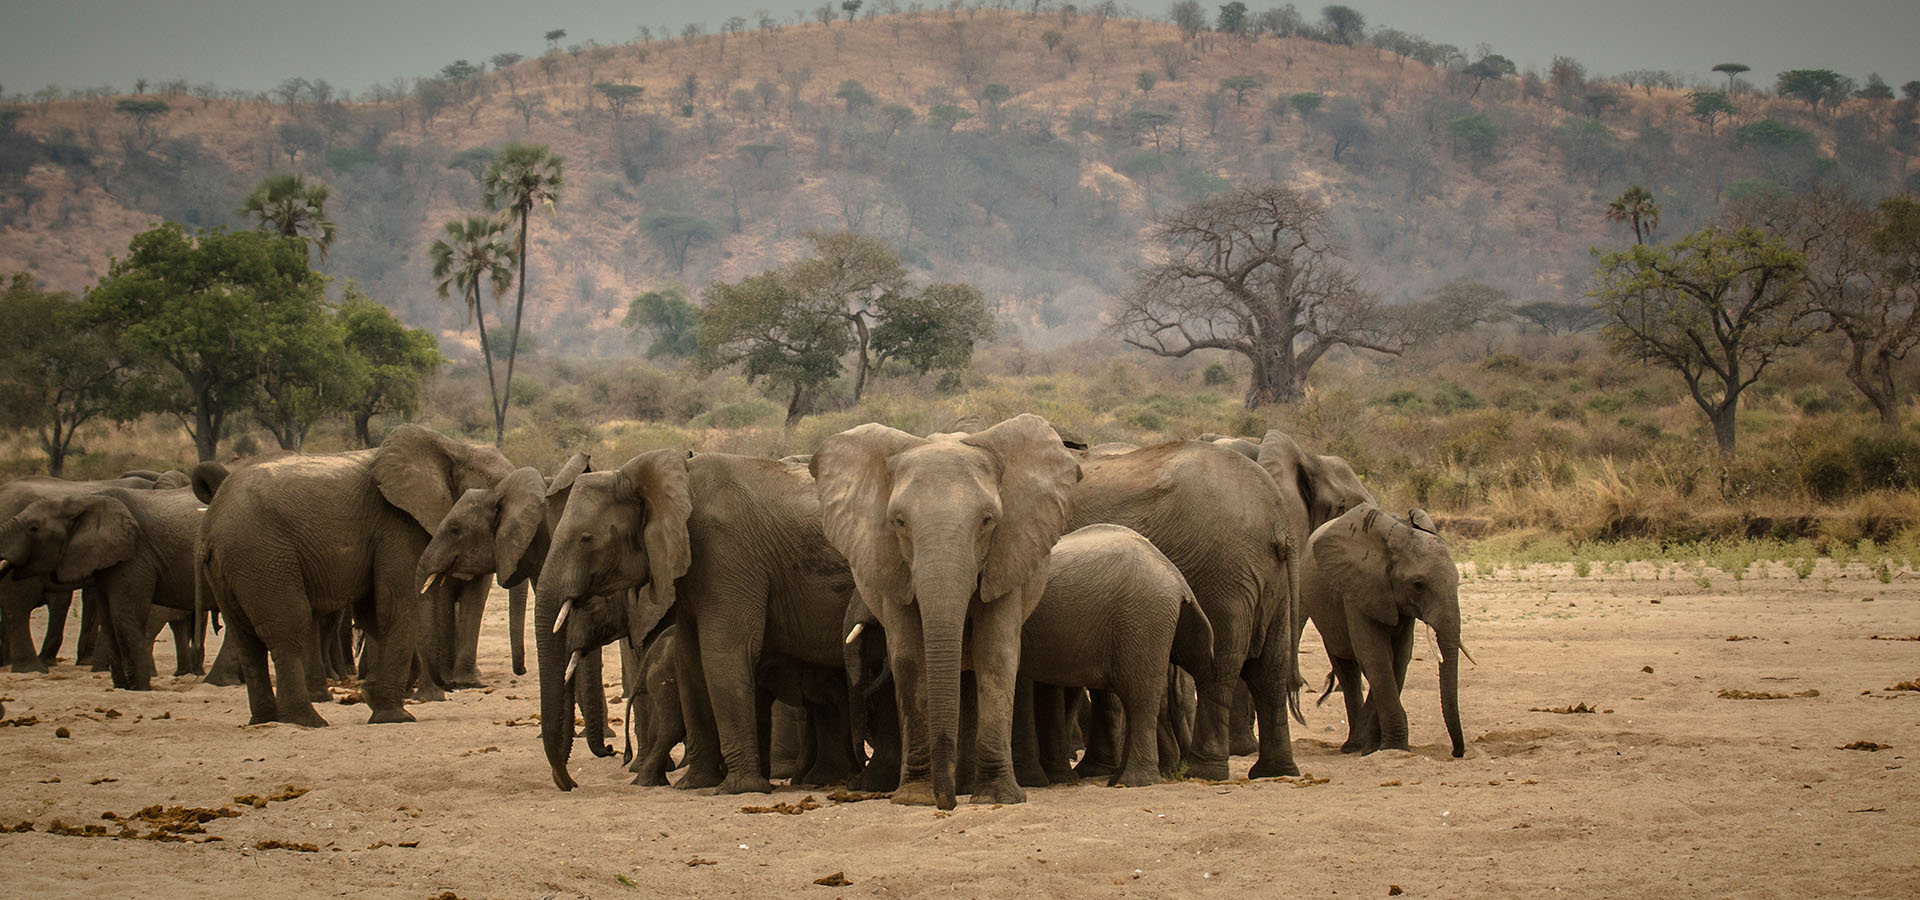 Northern Tanzania Wildlife Safari - Private Budget